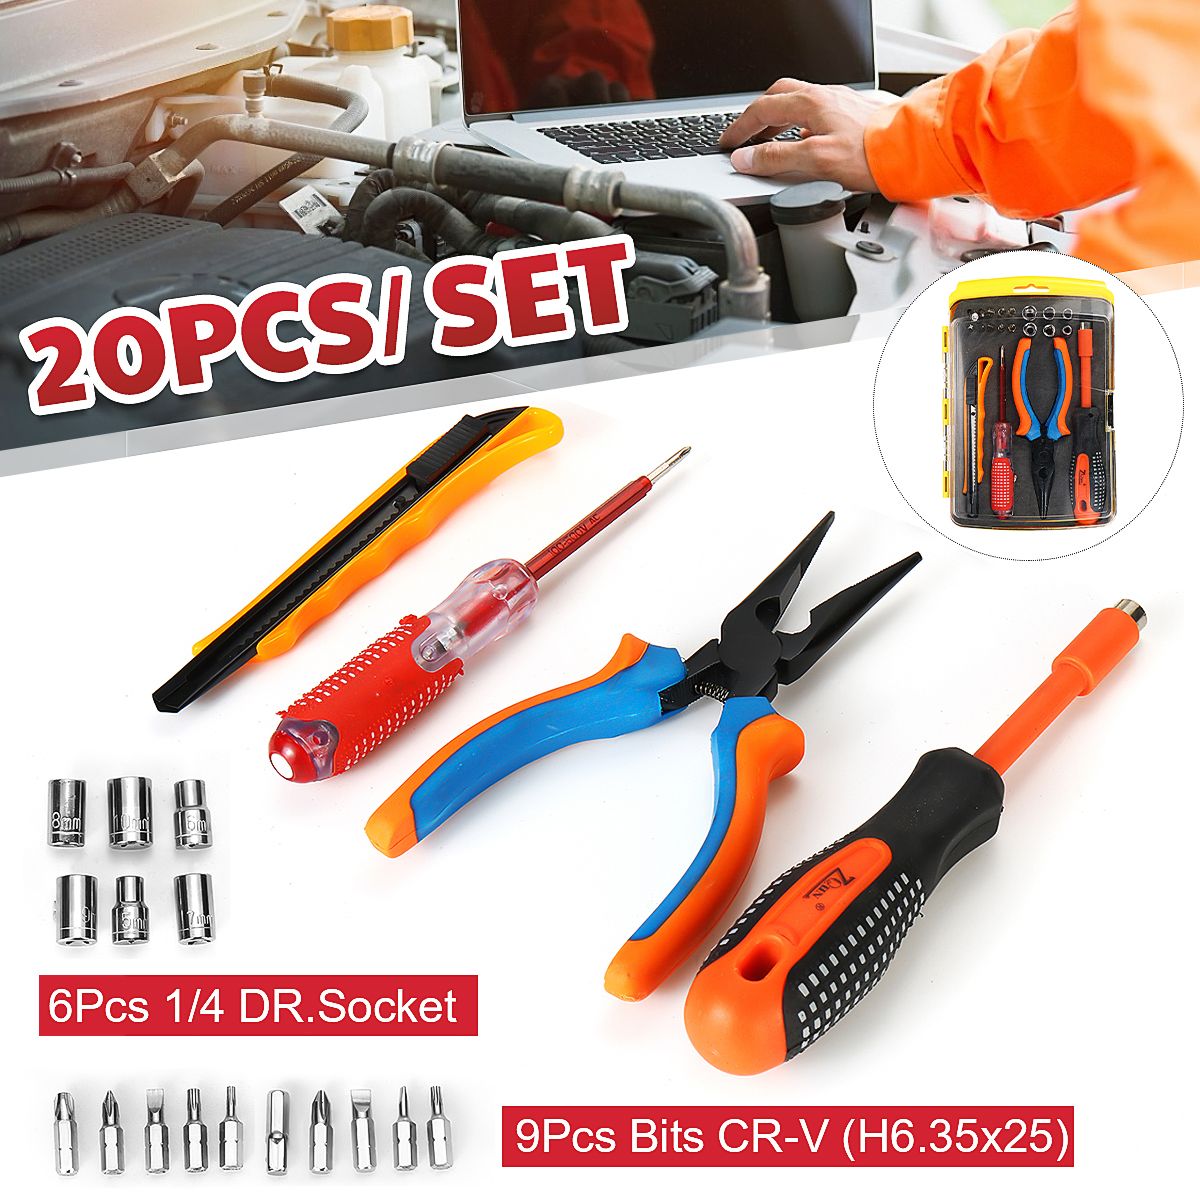 20PcsSet-Multifunction-Insulated-Sockets-Screwdriver-Bits-Kit-Plier-Repair-Tool-1654052